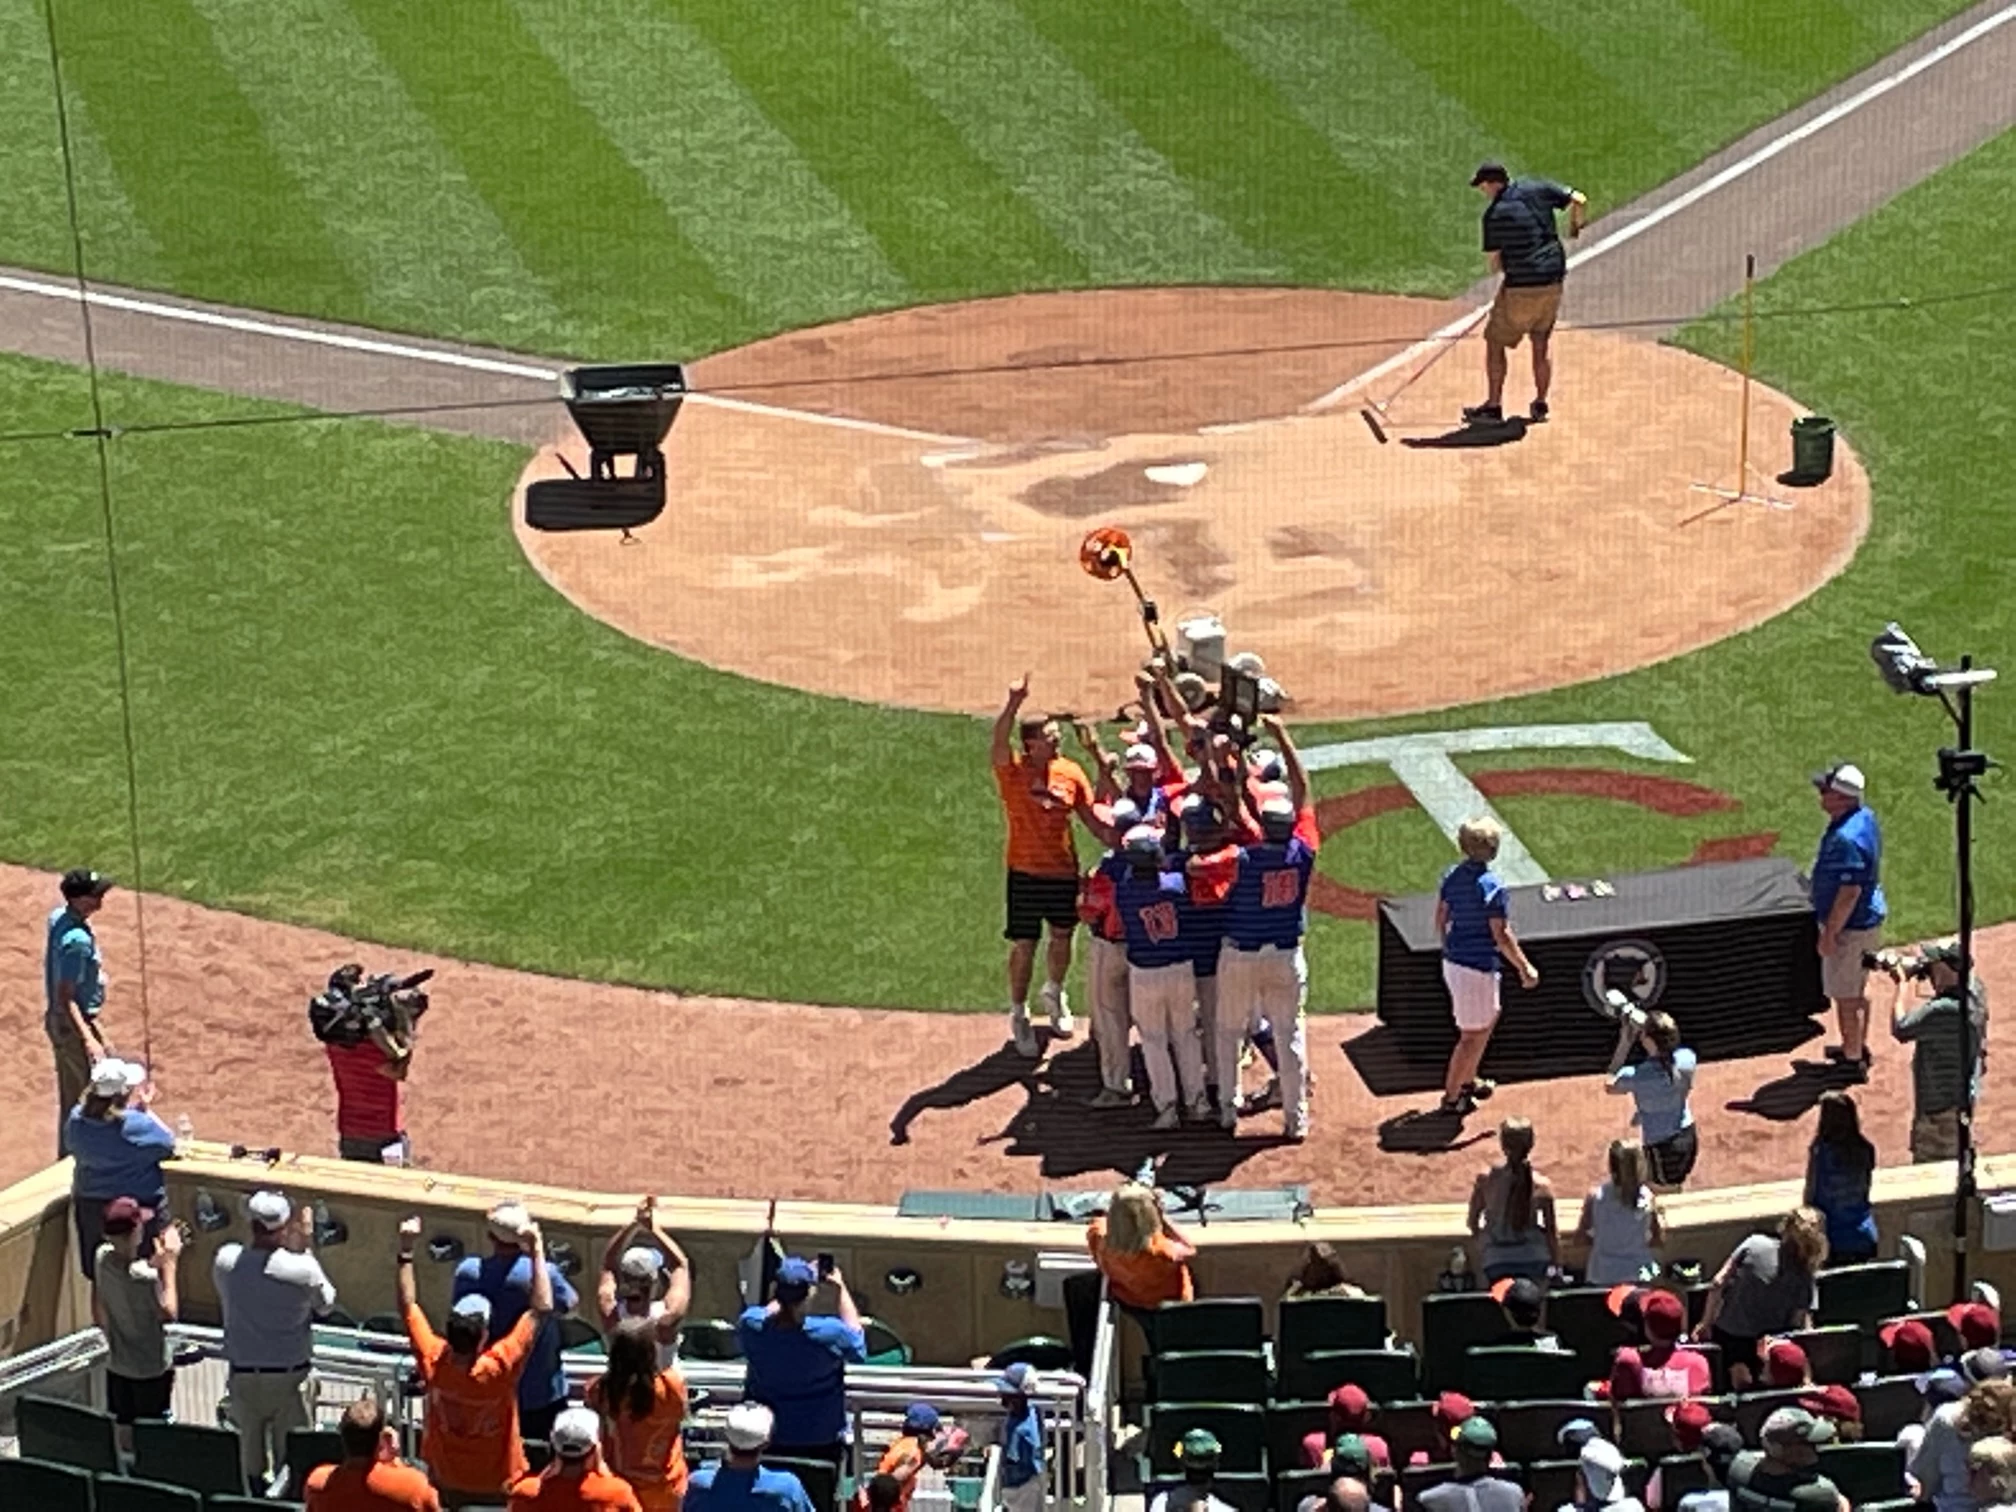 Minnesota High School Baseball Champions Crowned at Target Field